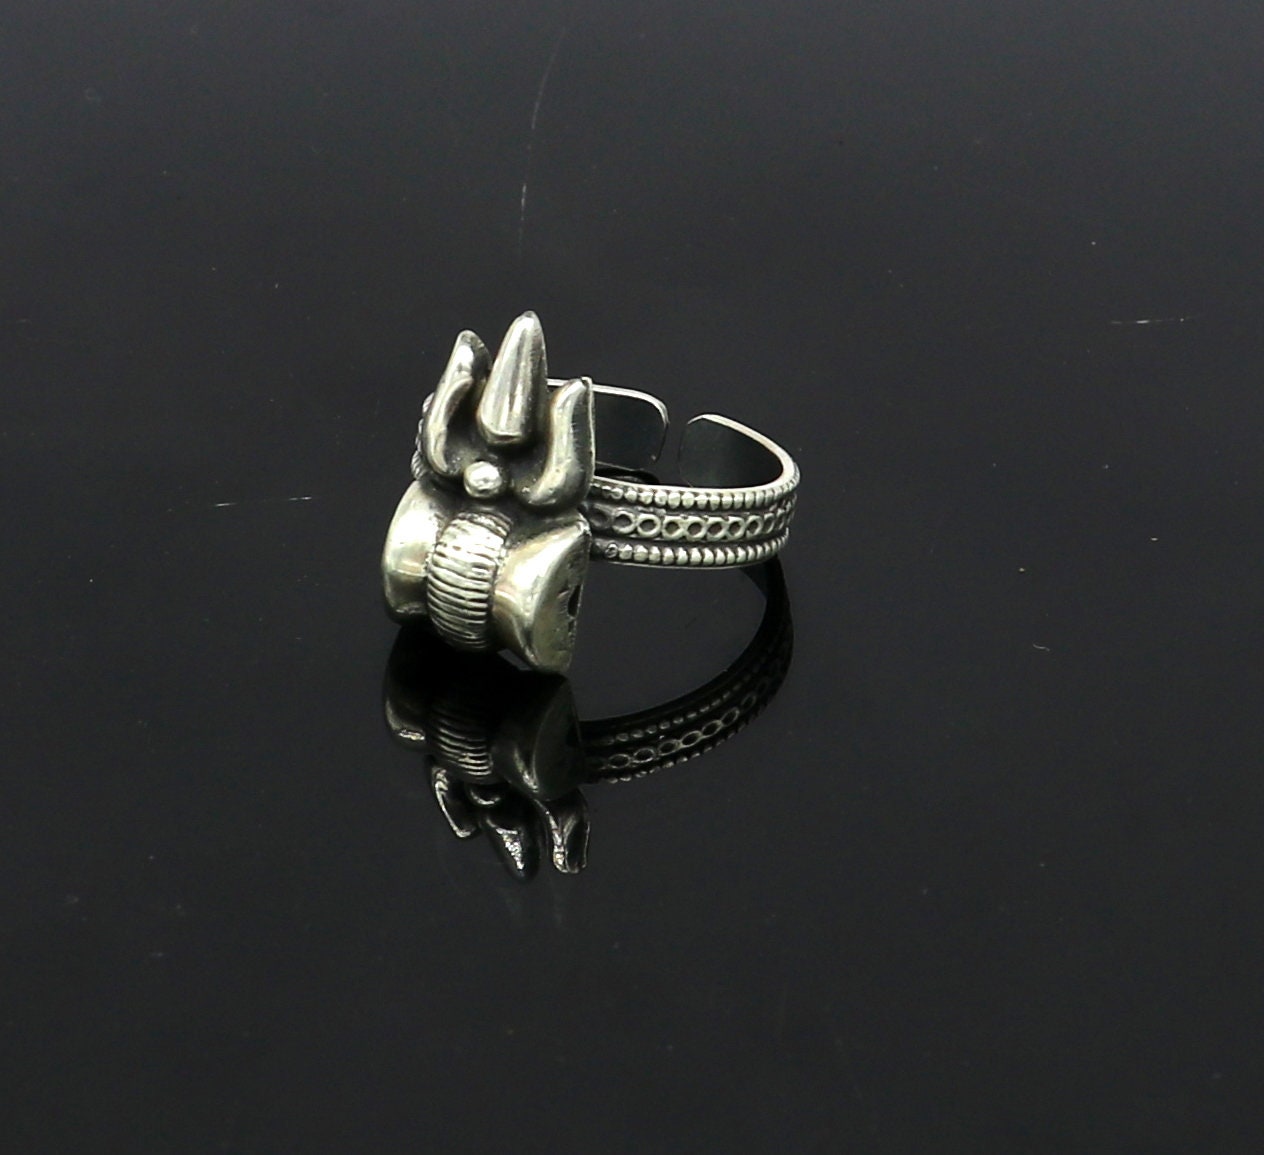 SHIVA EYE RING - Adjustable Shiva Shell Ring - Sterling Silver - Spiritual  - Third eye - Reiki - Beach ring - Bespoke Fossil Ring Gift